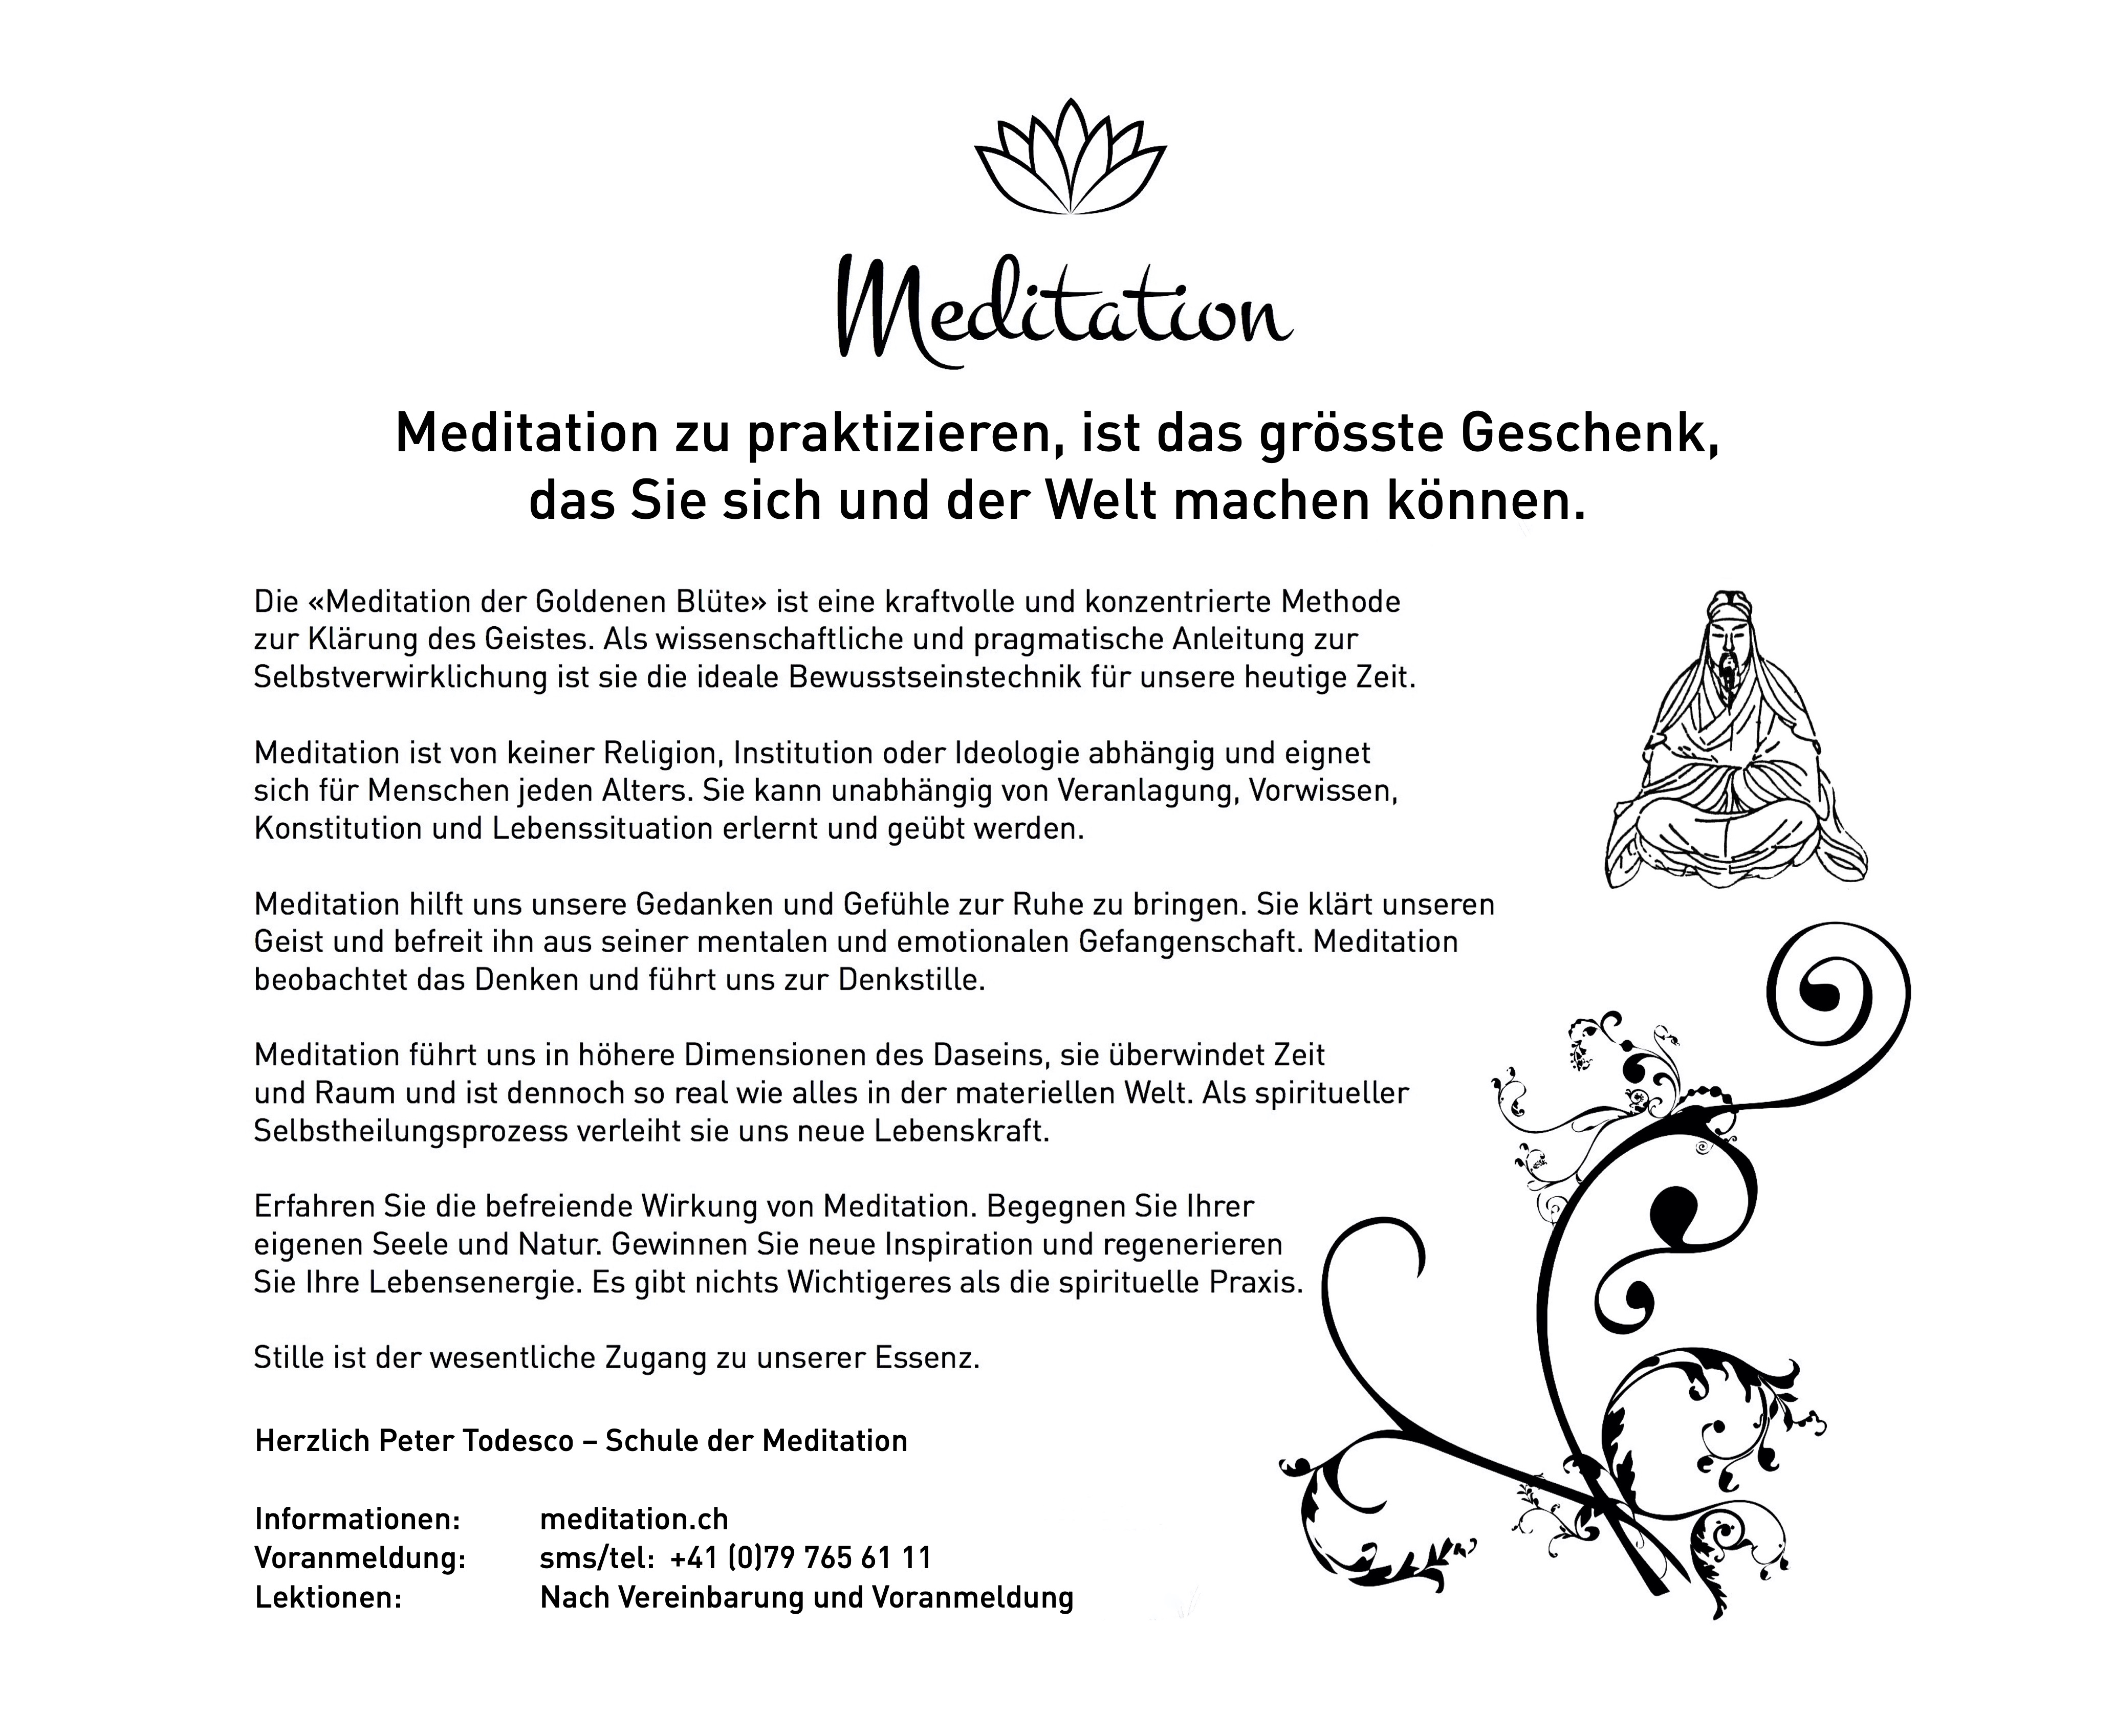 (c) Meditation.ch